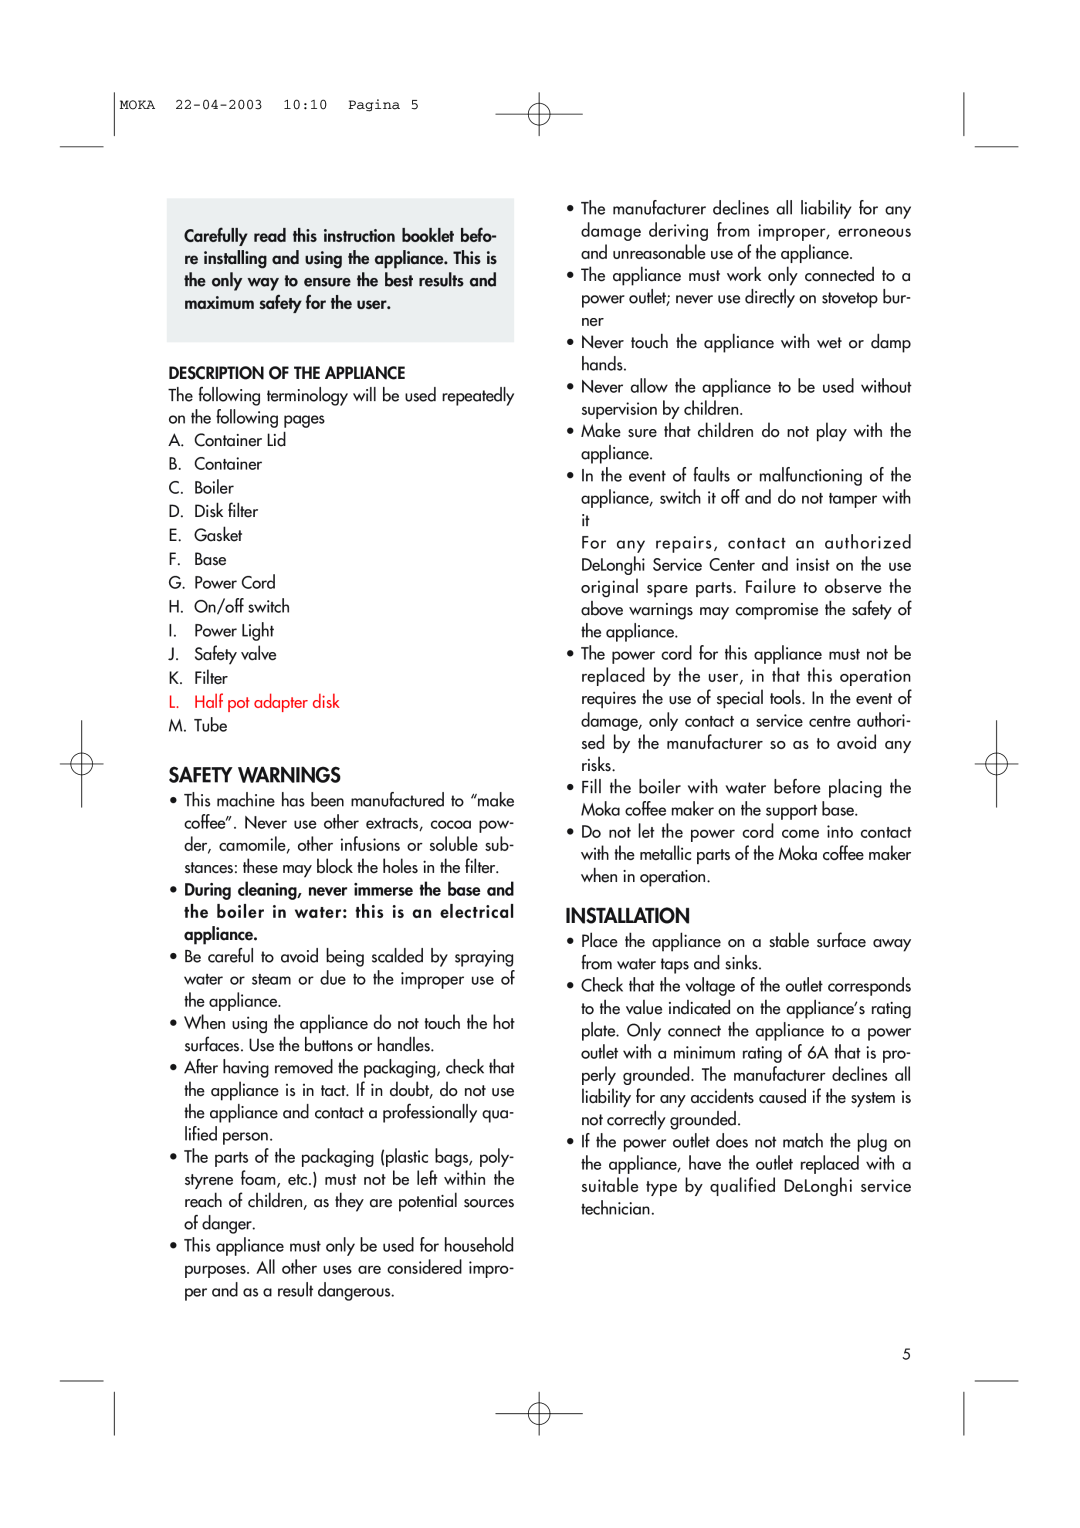 DeLonghi EMK6 manual Safety Warnings, Installation 